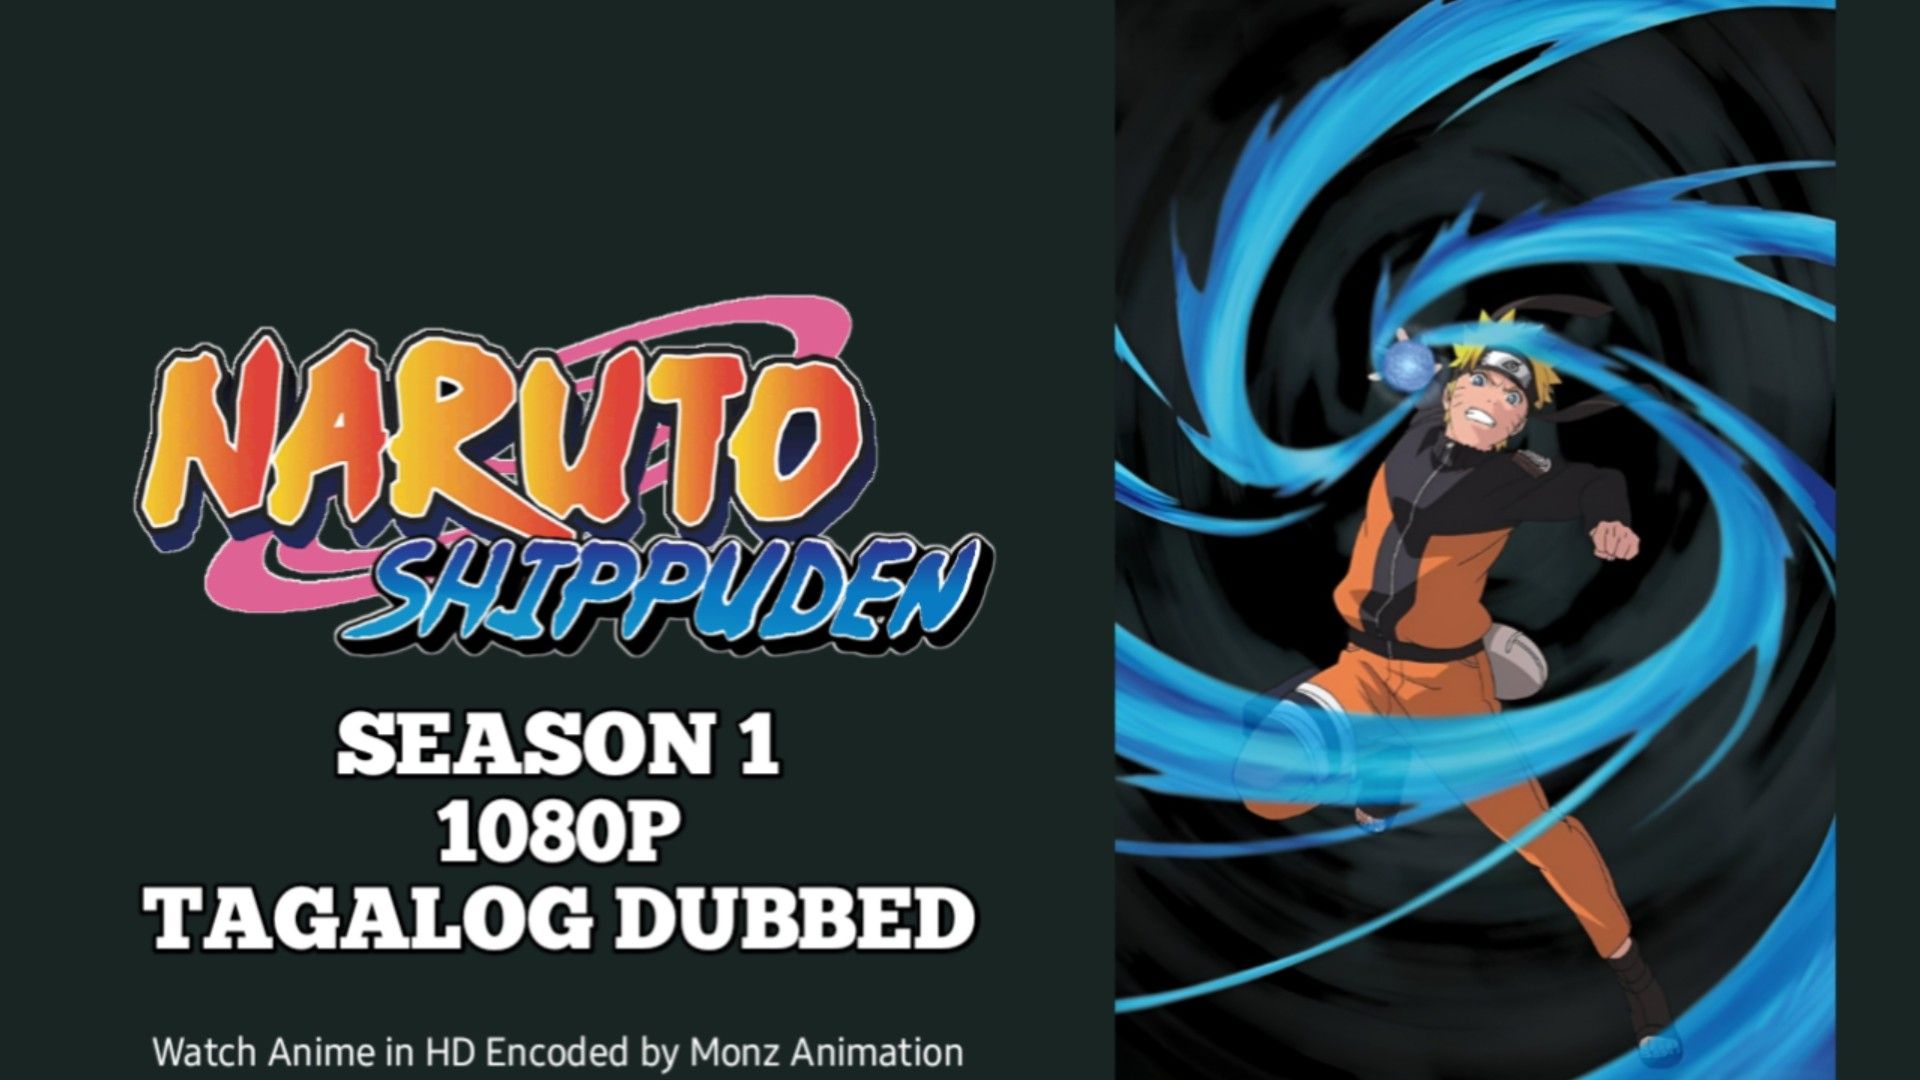 Watch Naruto Shippuden Episode 1 Online - Homecoming